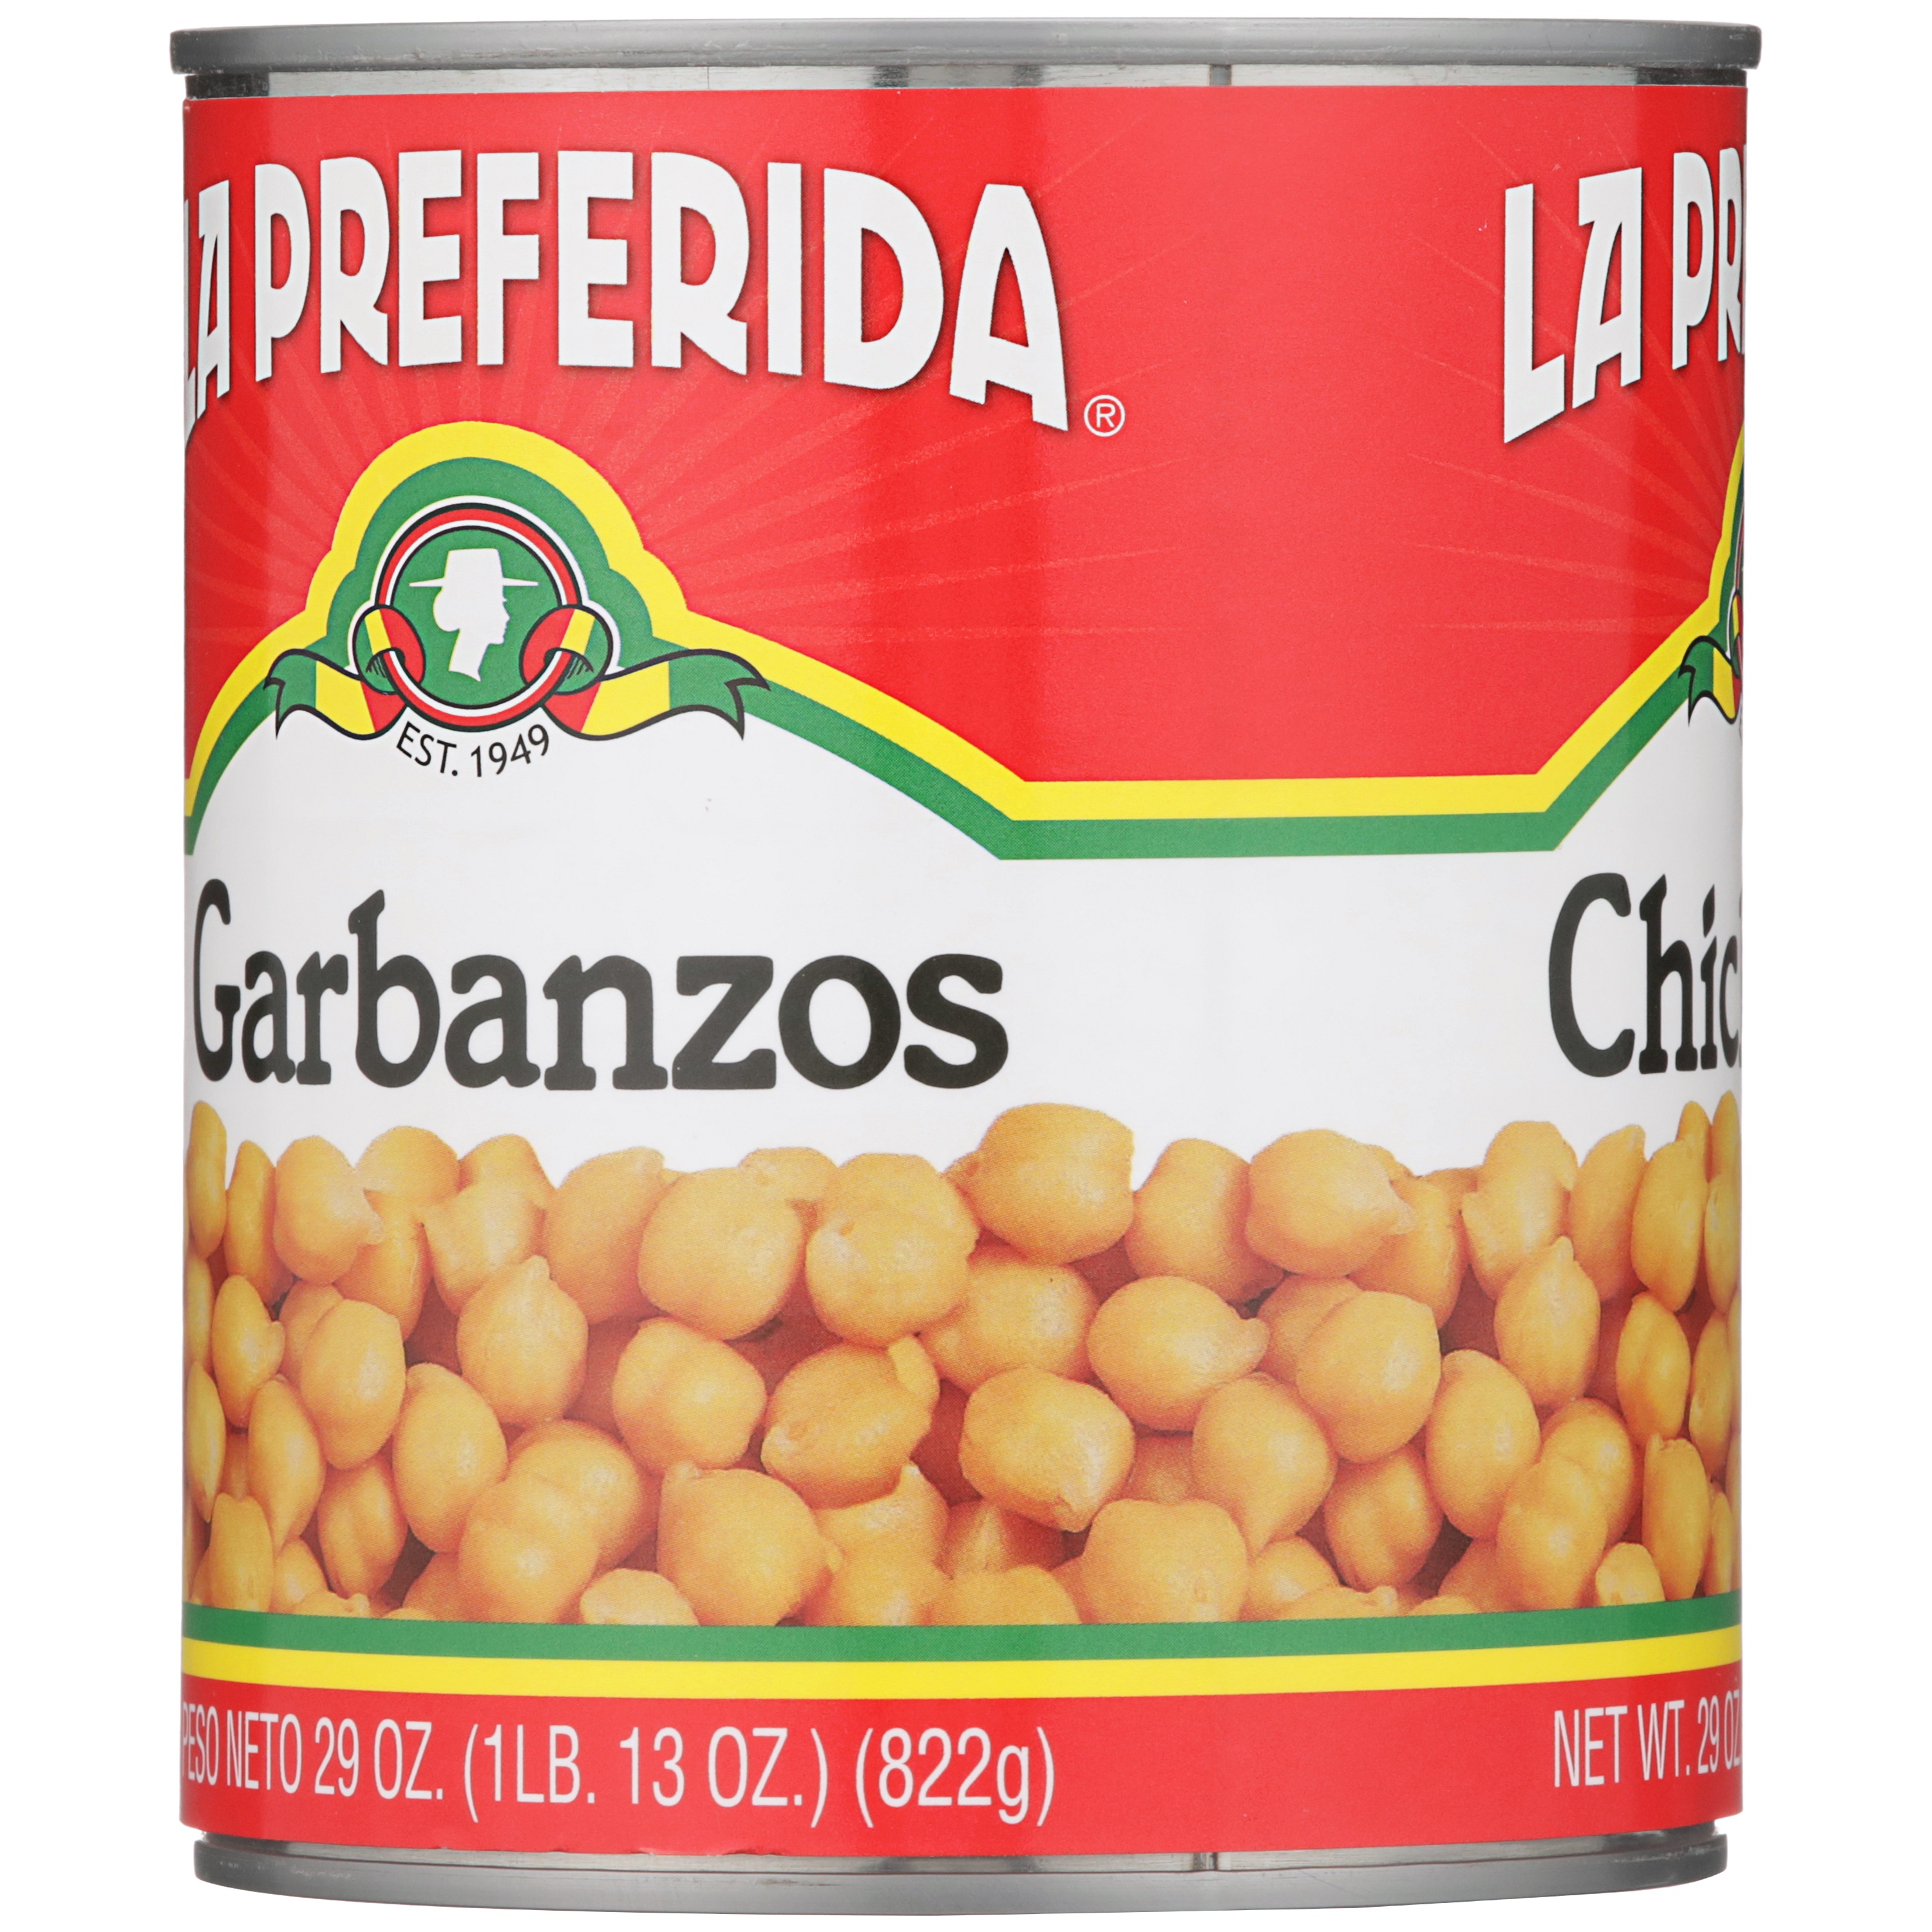 La Preferida Garbanzos, Canned Vegetables, 29 oz